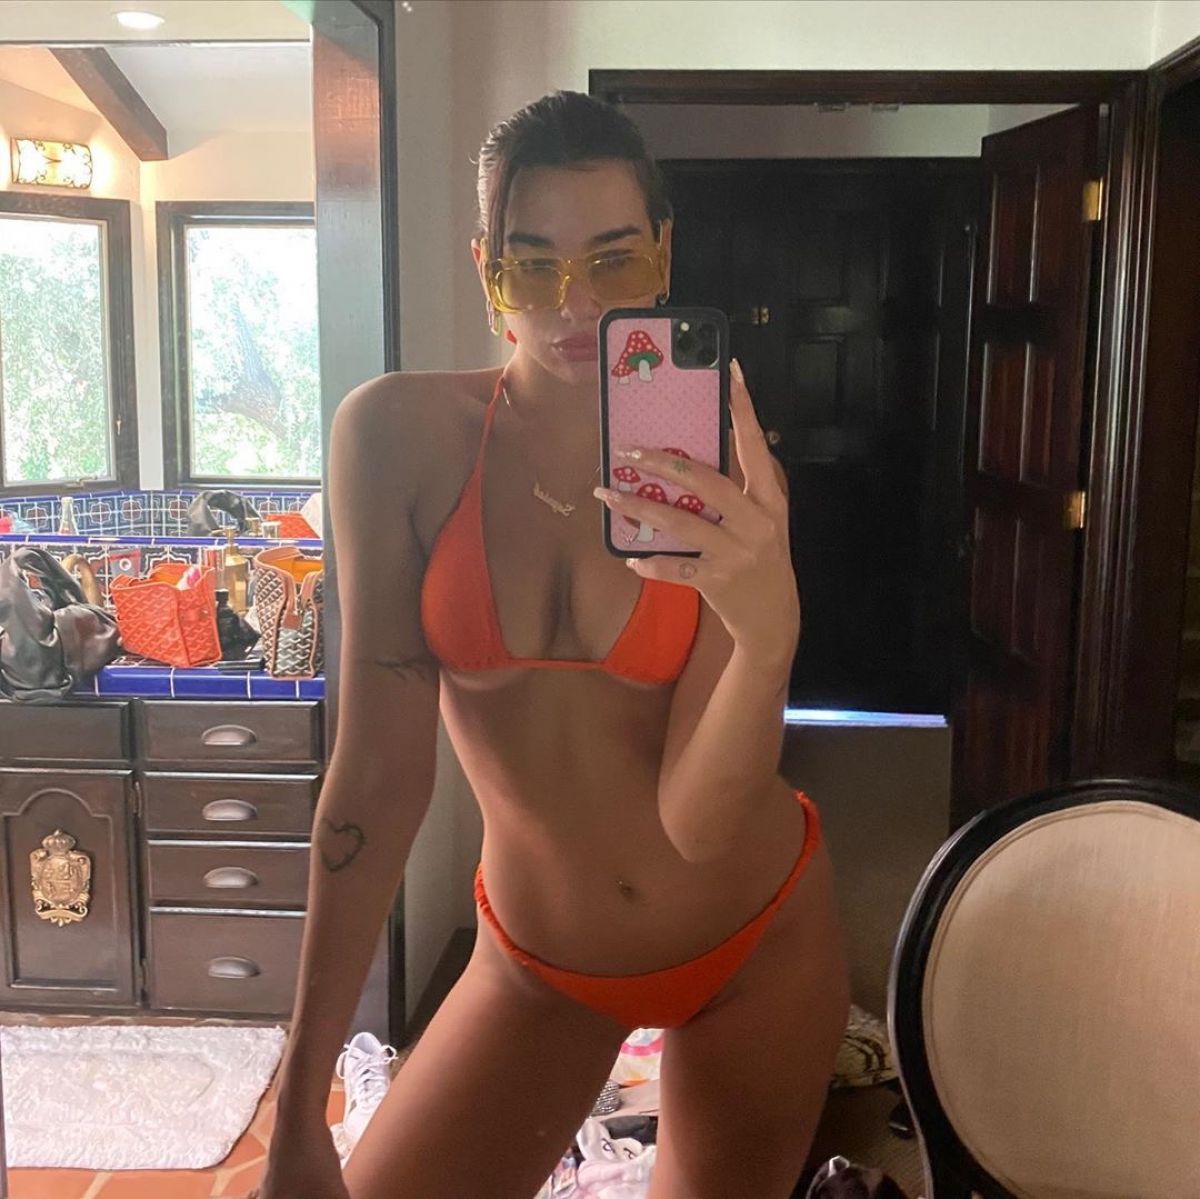 DUA LIPA in Bikini - Instagram Photos 09/09/2020 - HawtCelebs